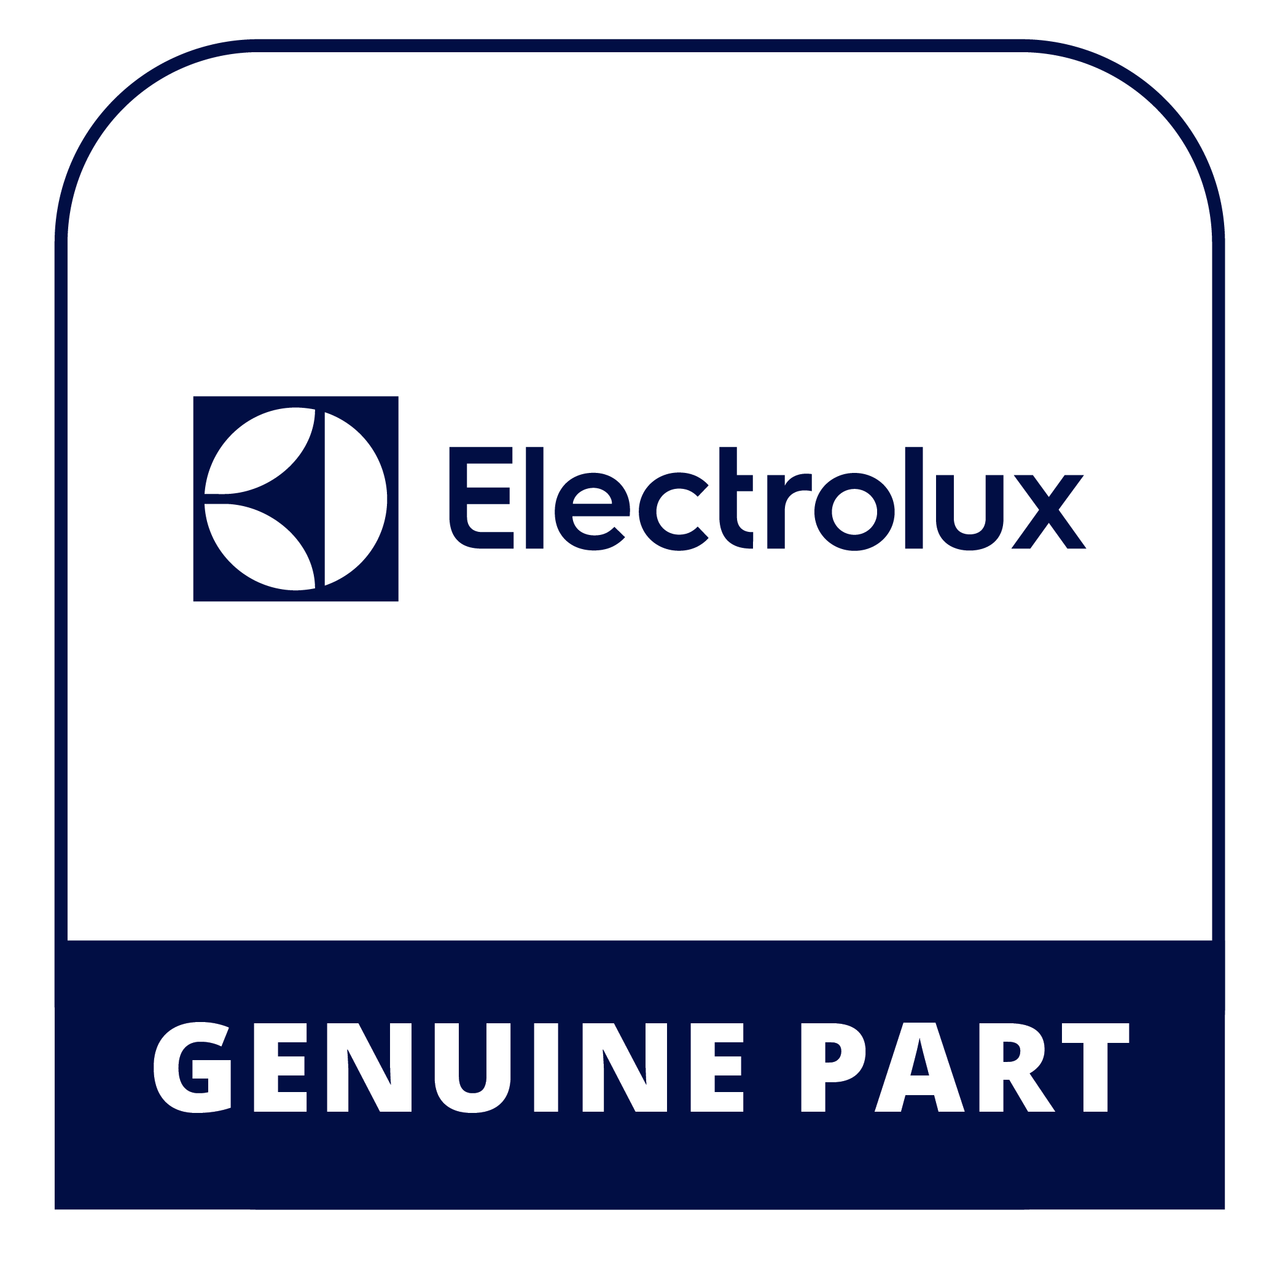 Frigidaire - Electrolux 131970200 - Button - Genuine Electrolux Part